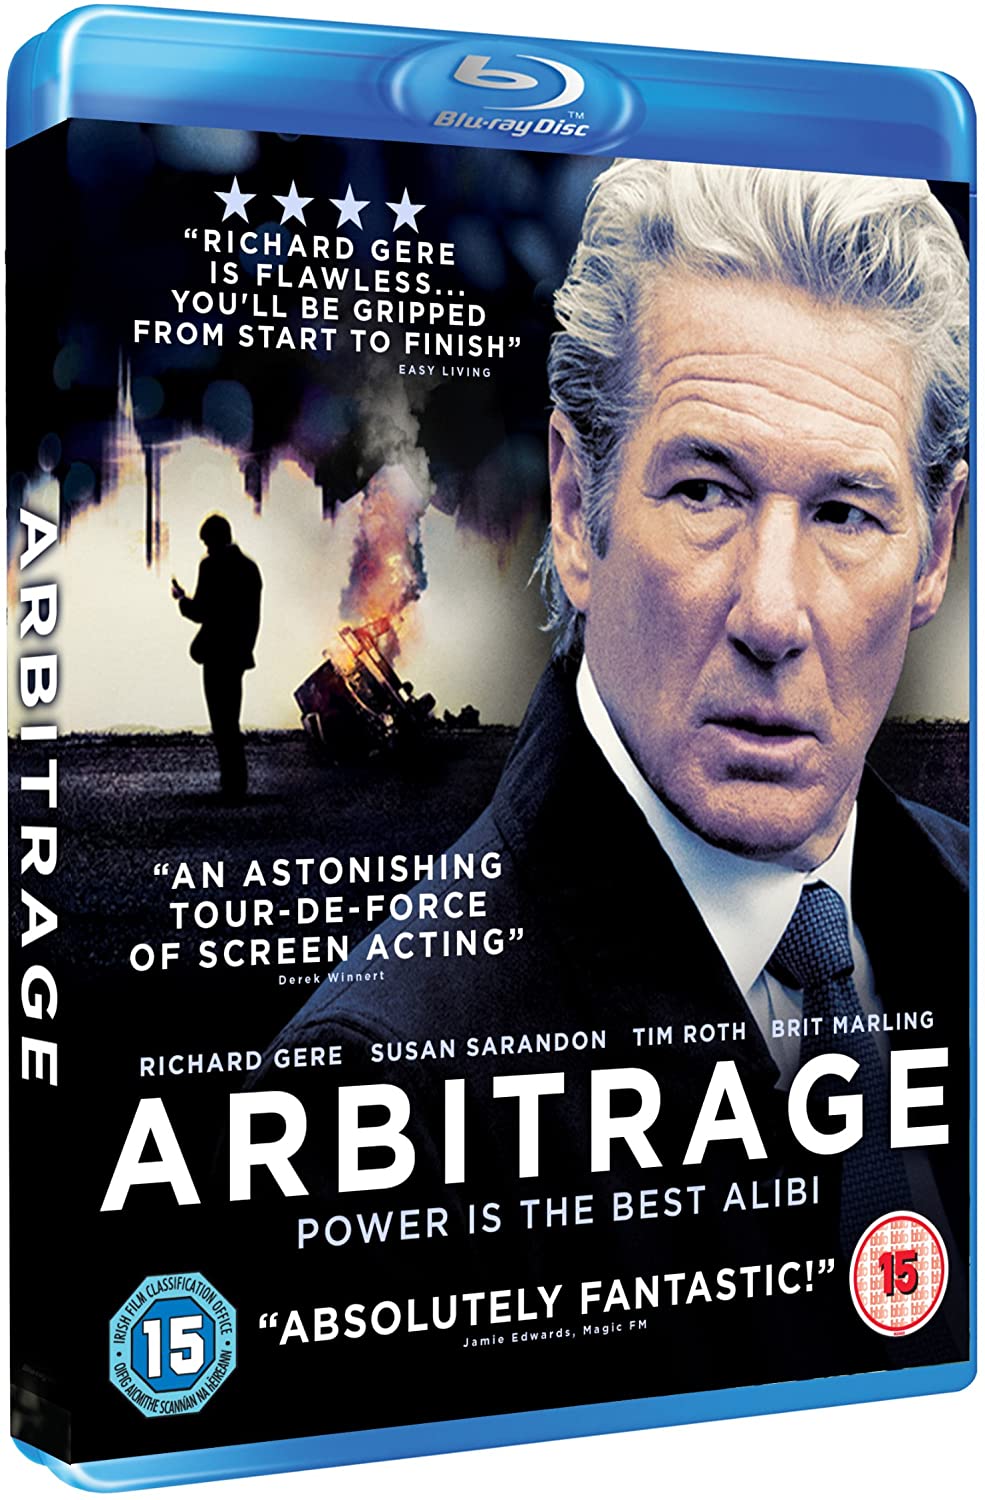 Arbitrage [2013] (Blu-ray)